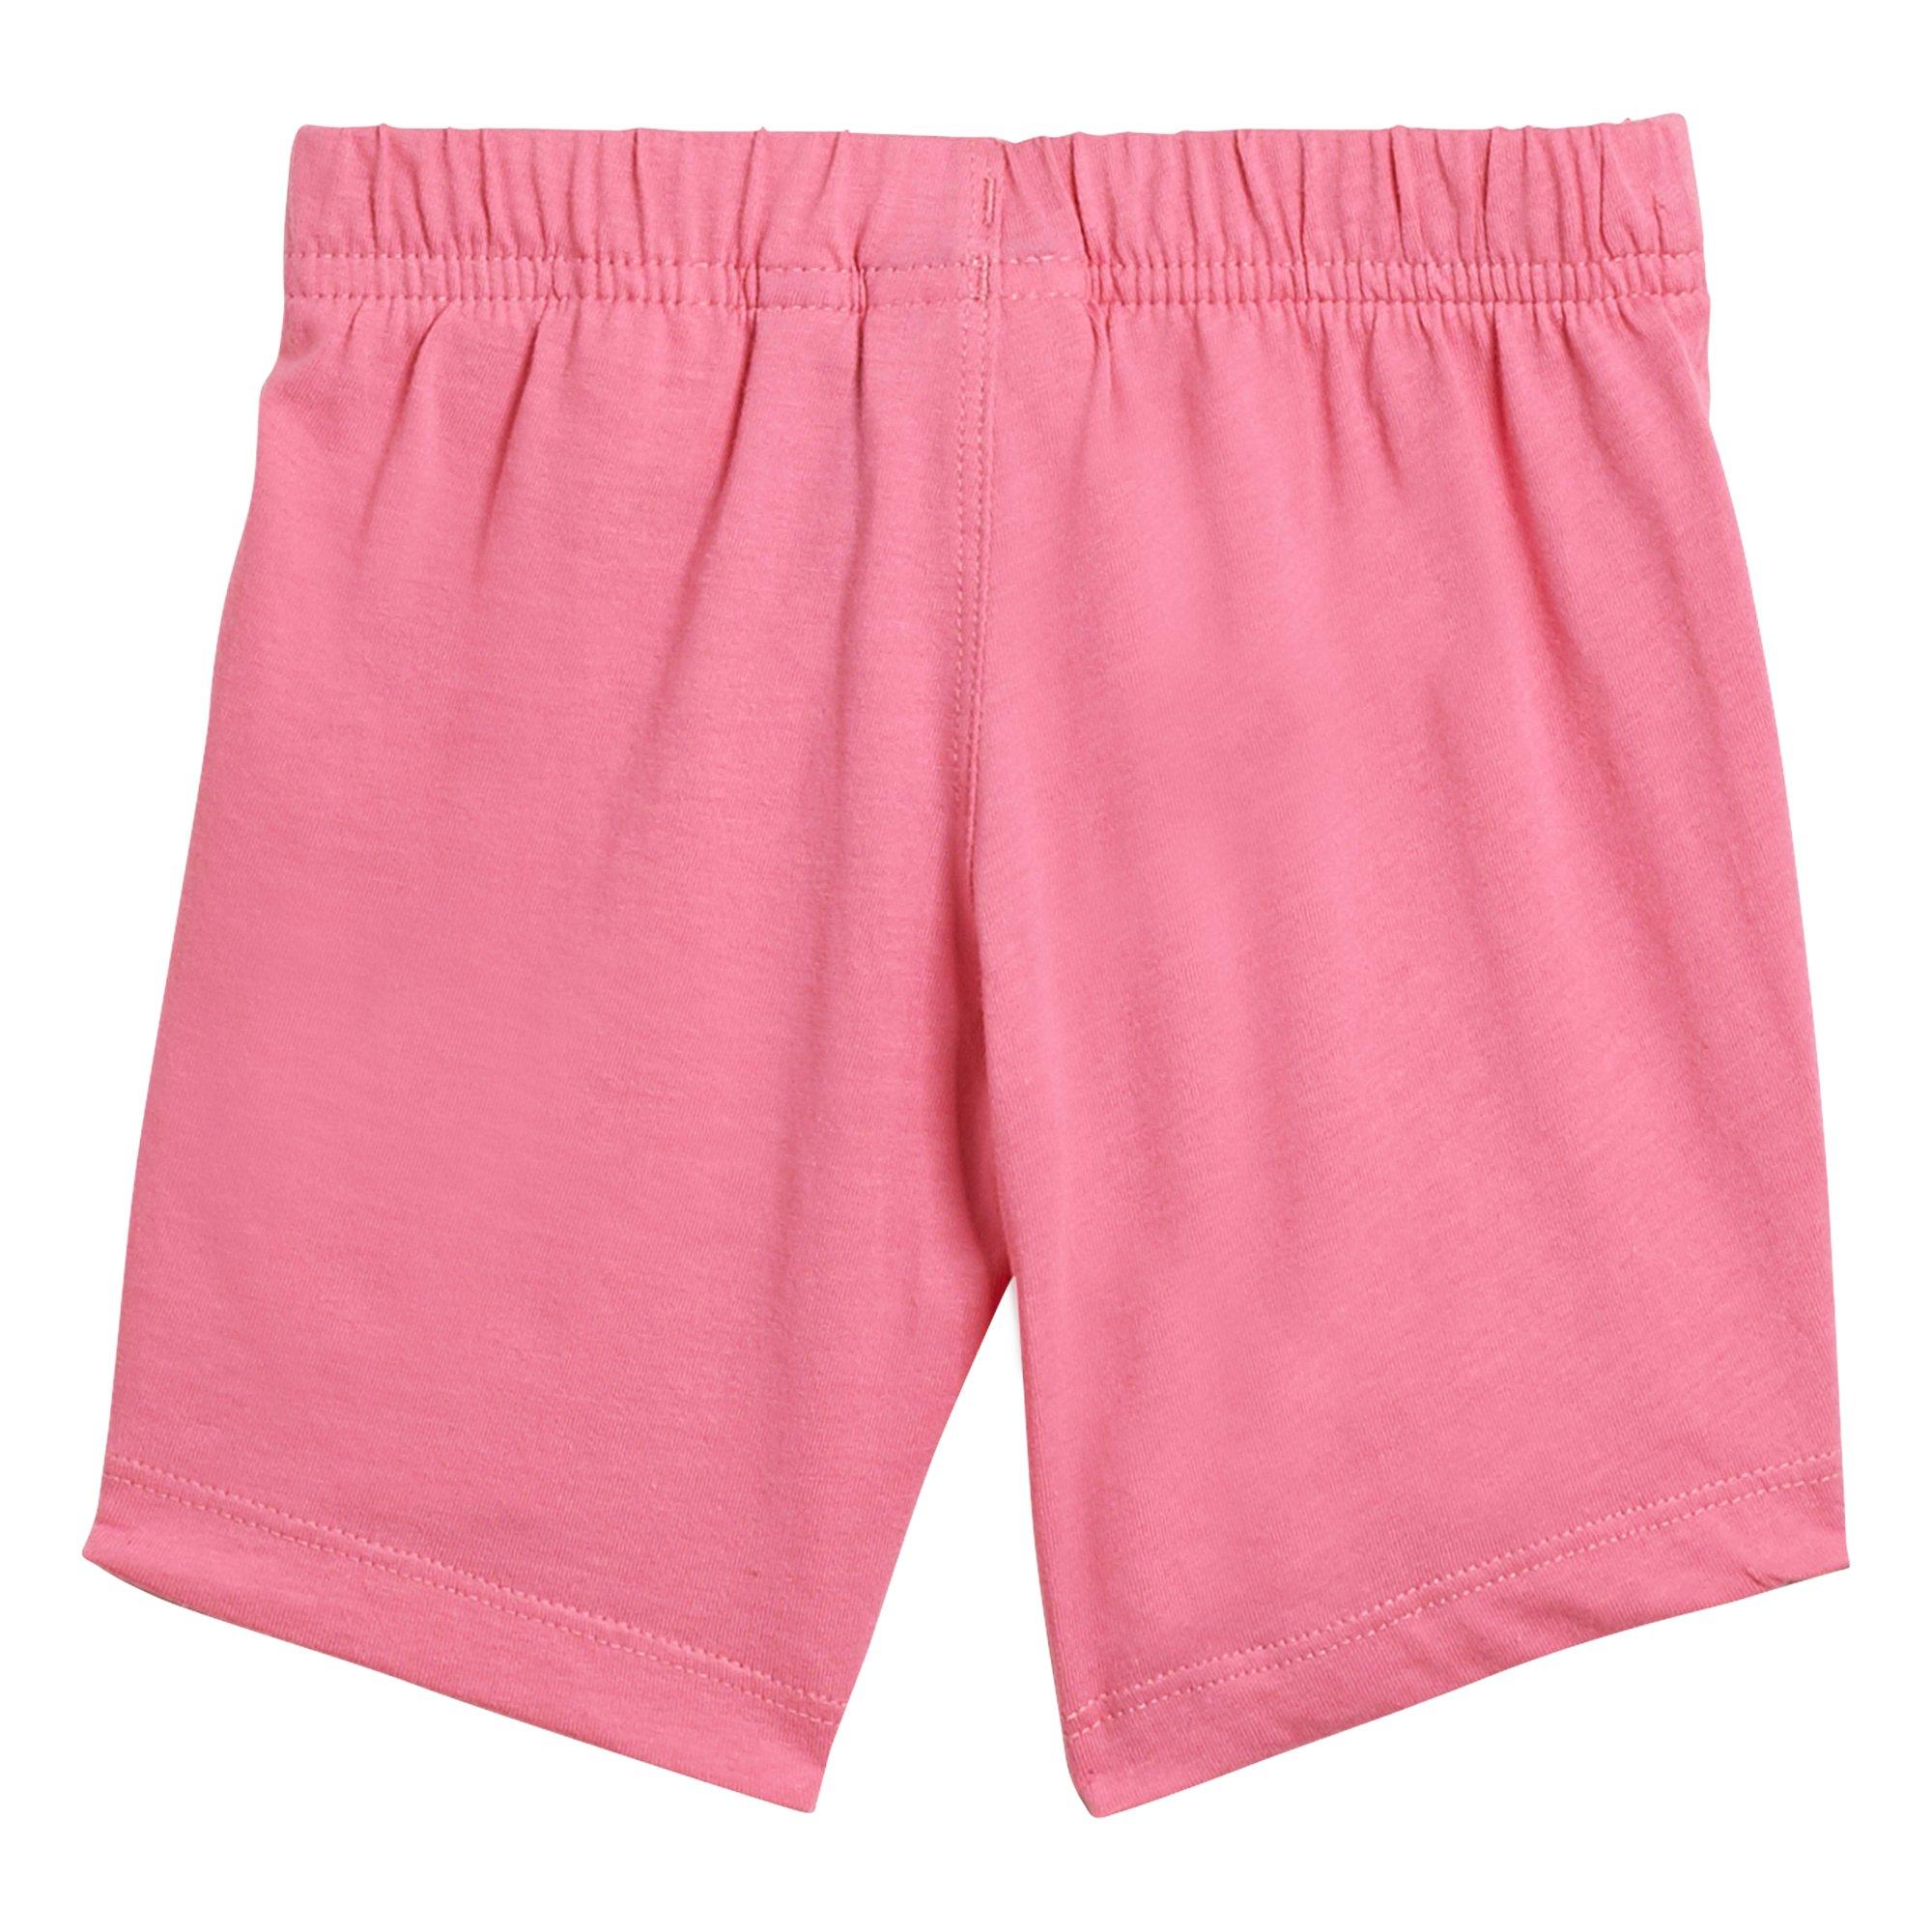 | Adicolor Hibbett Set City Tee Toddler and - White/Pink Gear Shorts Girls\' adidas Originals